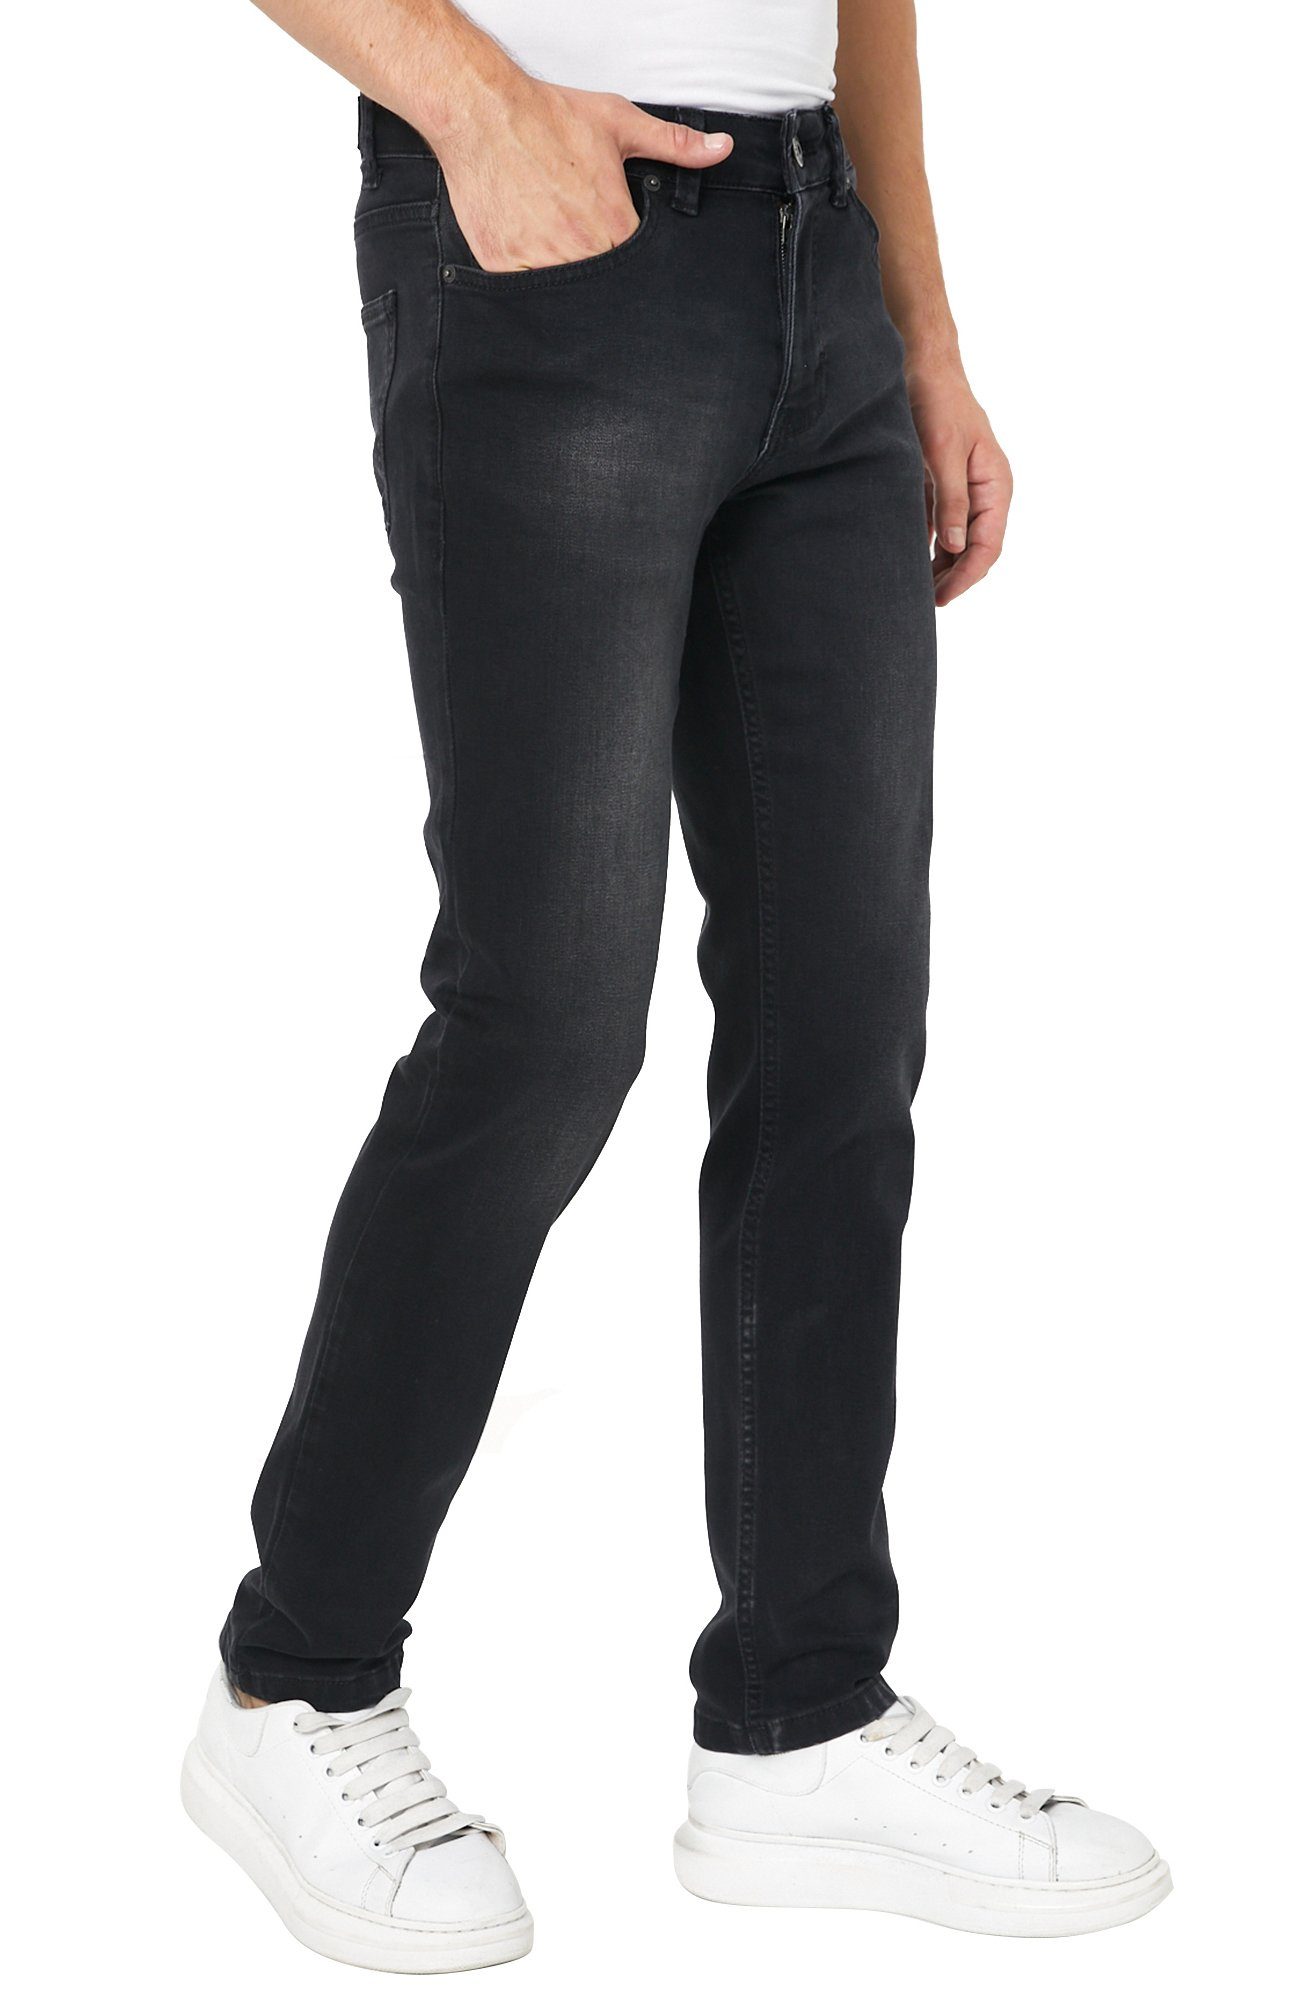 Smith & Solo Slim-fit-Jeans »Jeans Herren - Slim Fit Jeanshose, Hosen  Stretch Modern Männer Straight Hose Cut Basic Washed« 5-Pocket Design,  Slimfit, Grau online kaufen | OTTO